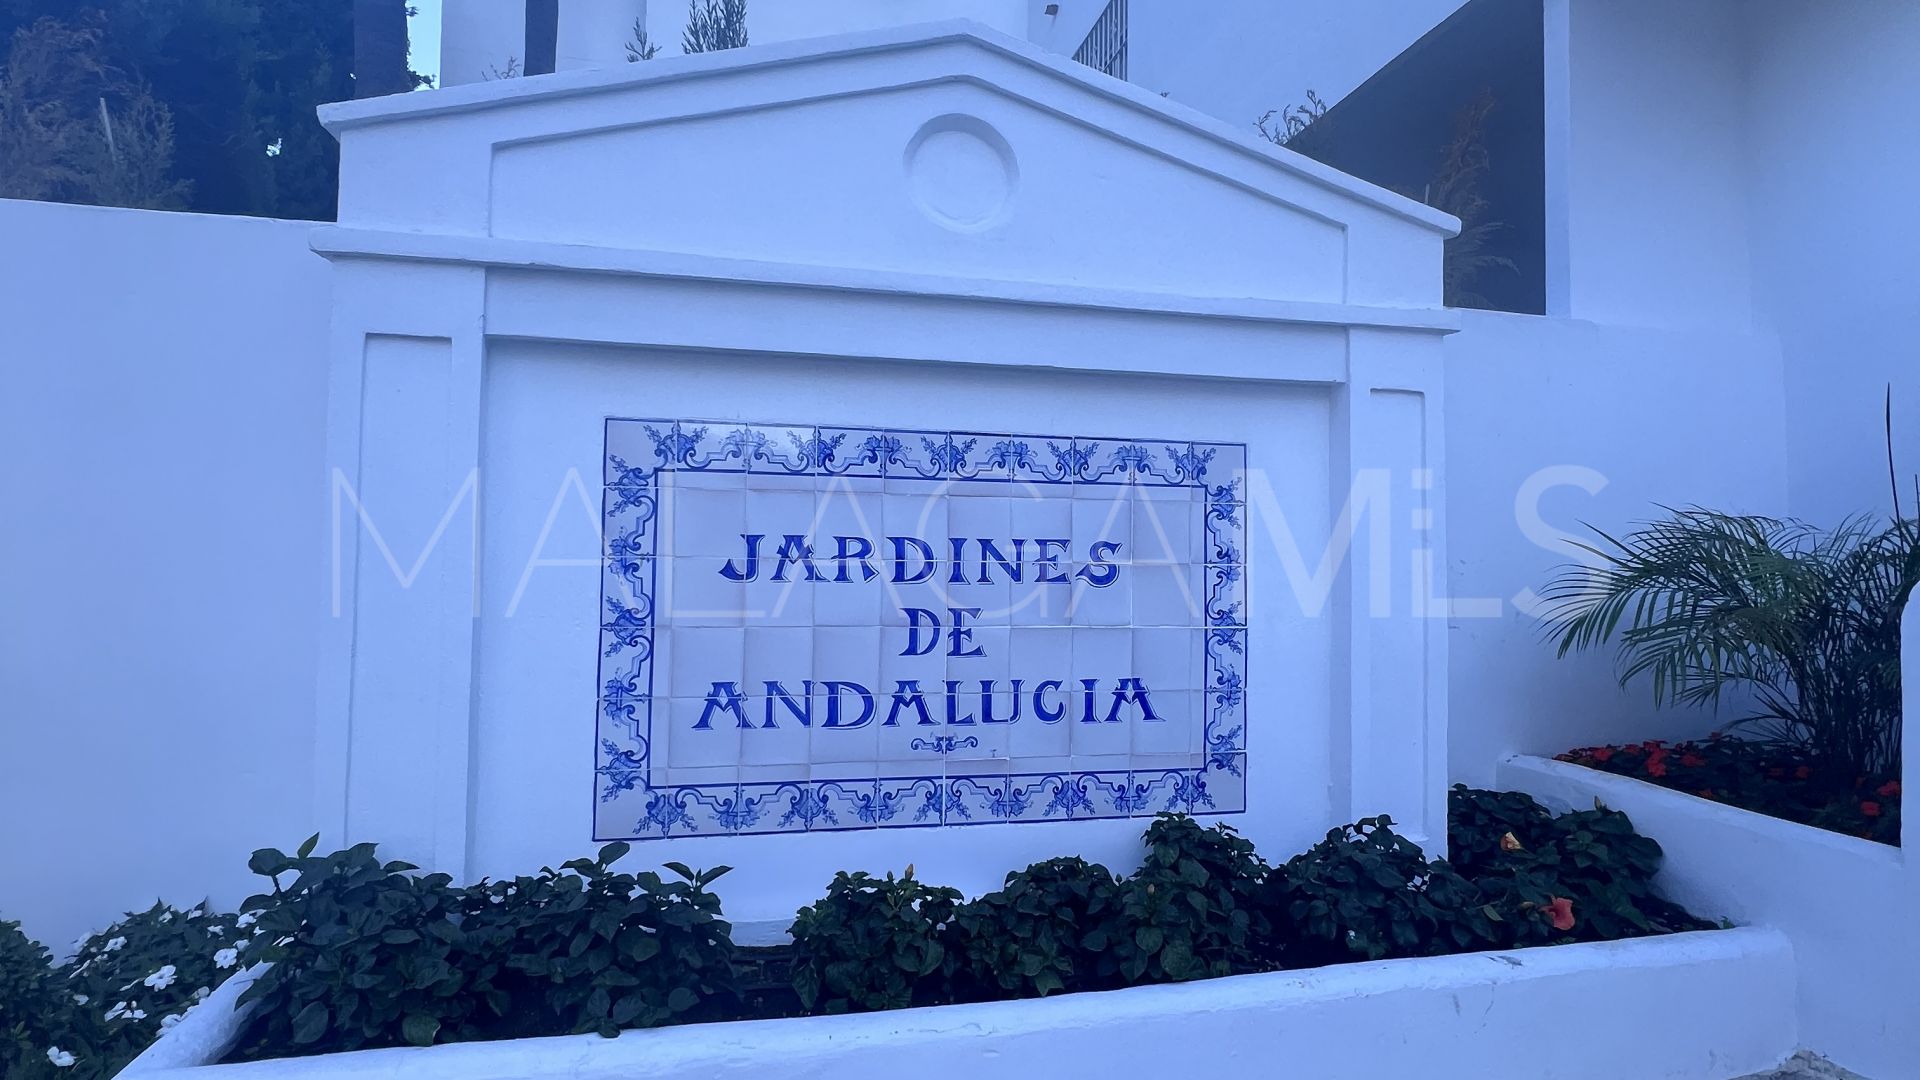 For sale Jardines de Andalucia 2 bedrooms apartment